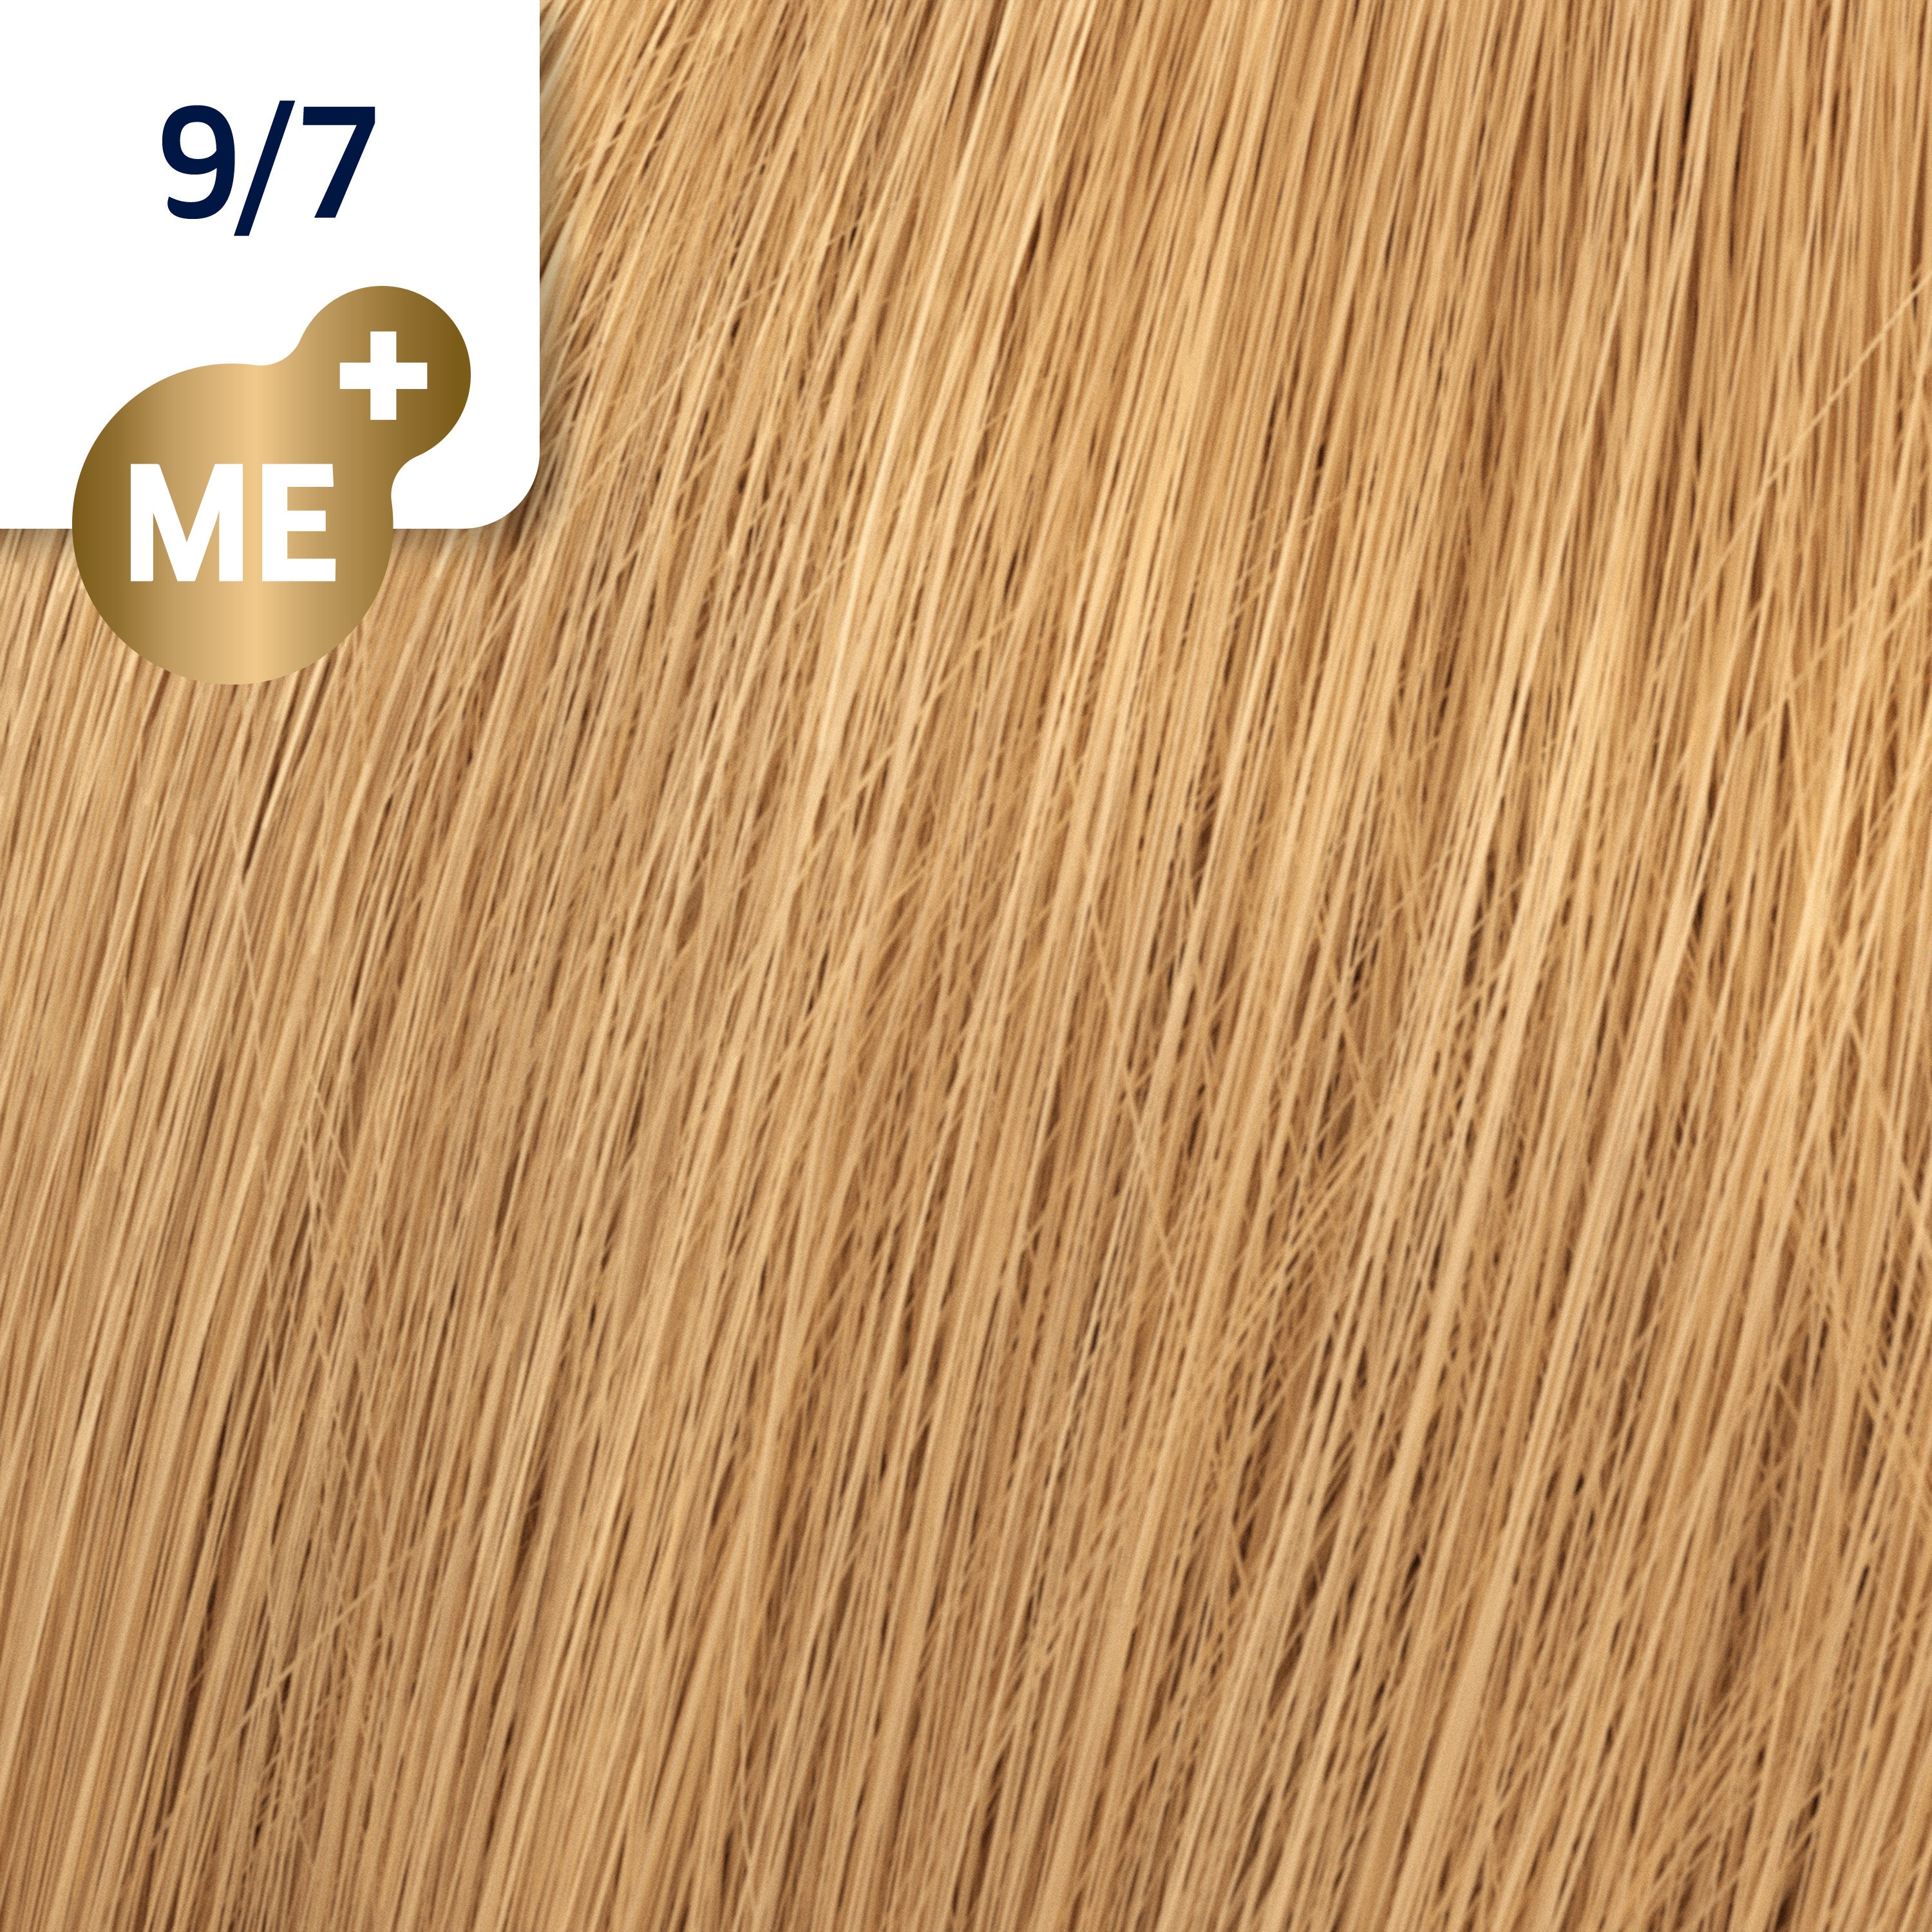 Wella Koleston Perfect Me+ Deep Browns 9/7 Very Light Brunette Blonde